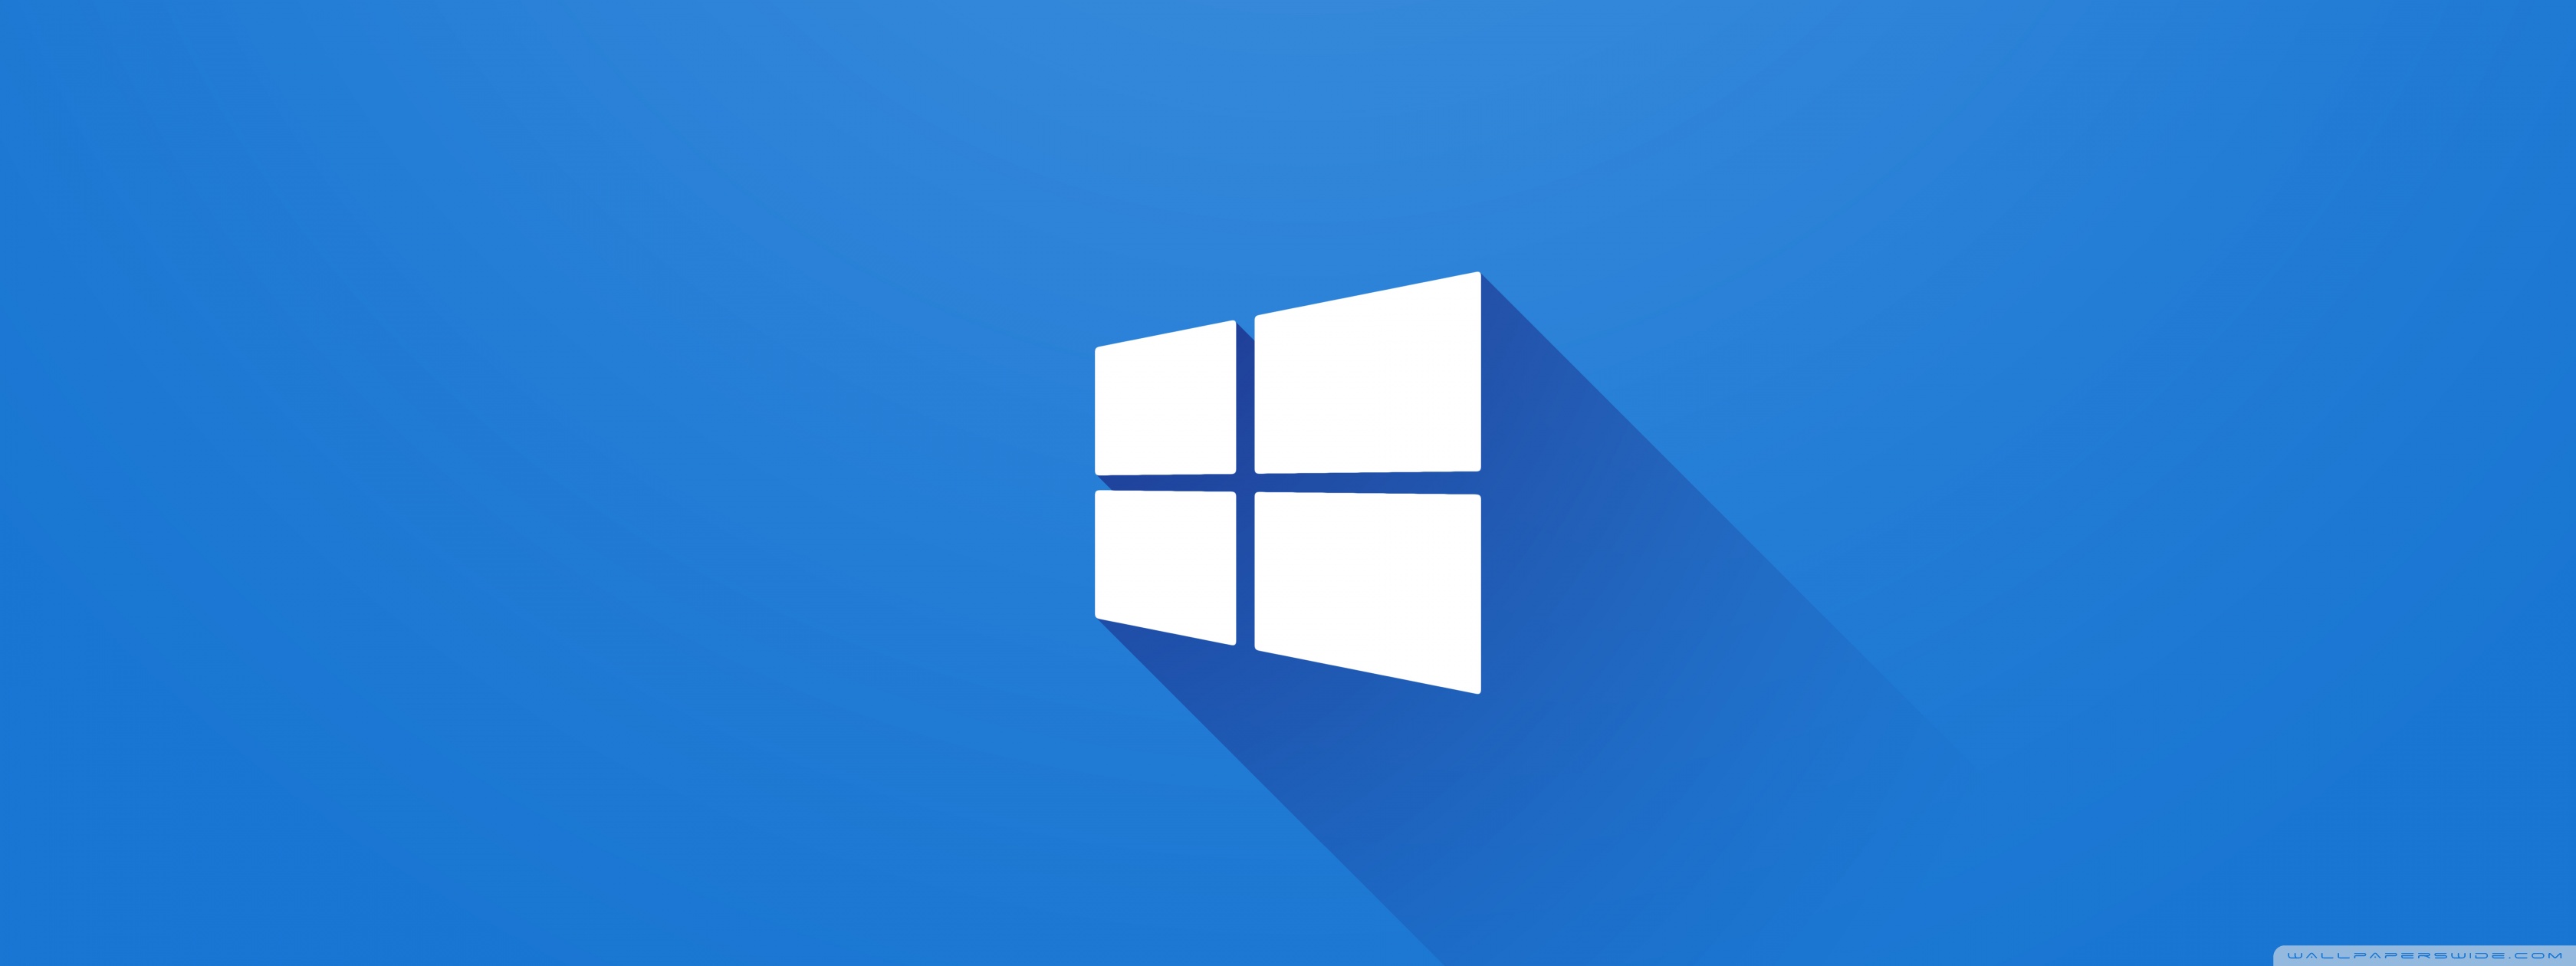 Windows 10 Logo Ultra HD Desktop Background Wallpaper for: Widescreen & UltraWide Desktop & Laptop, Multi Display, Dual Monitor, Tablet